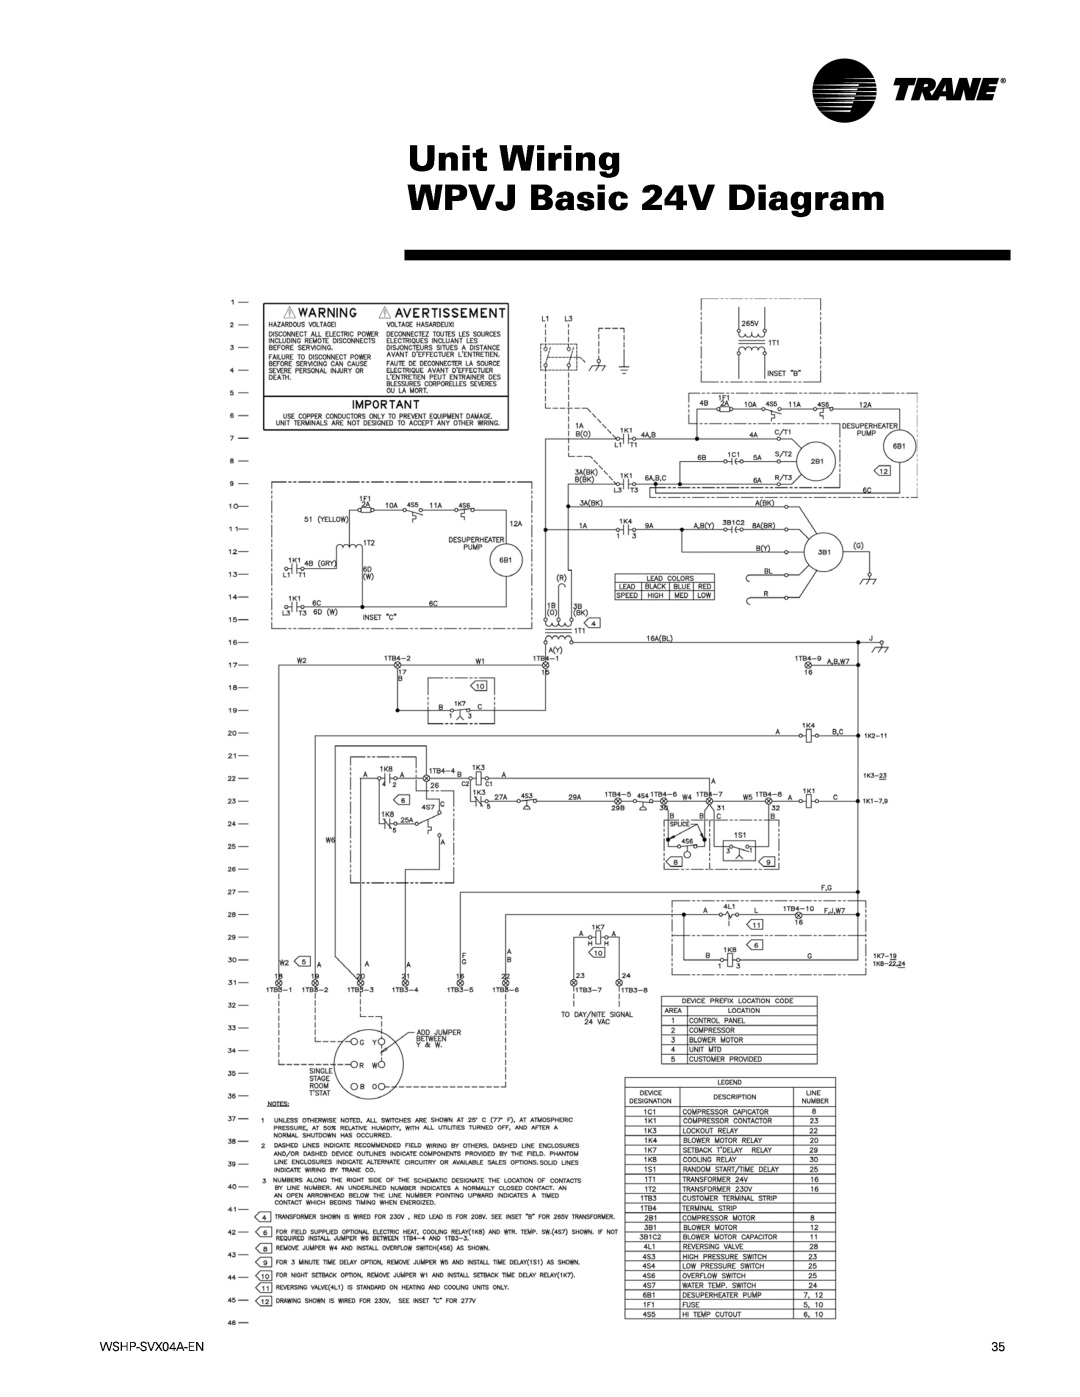 Trane WPHF manual Unit Wiring WPVJ Basic 24V Diagram, WSHP-SVX04A-EN 